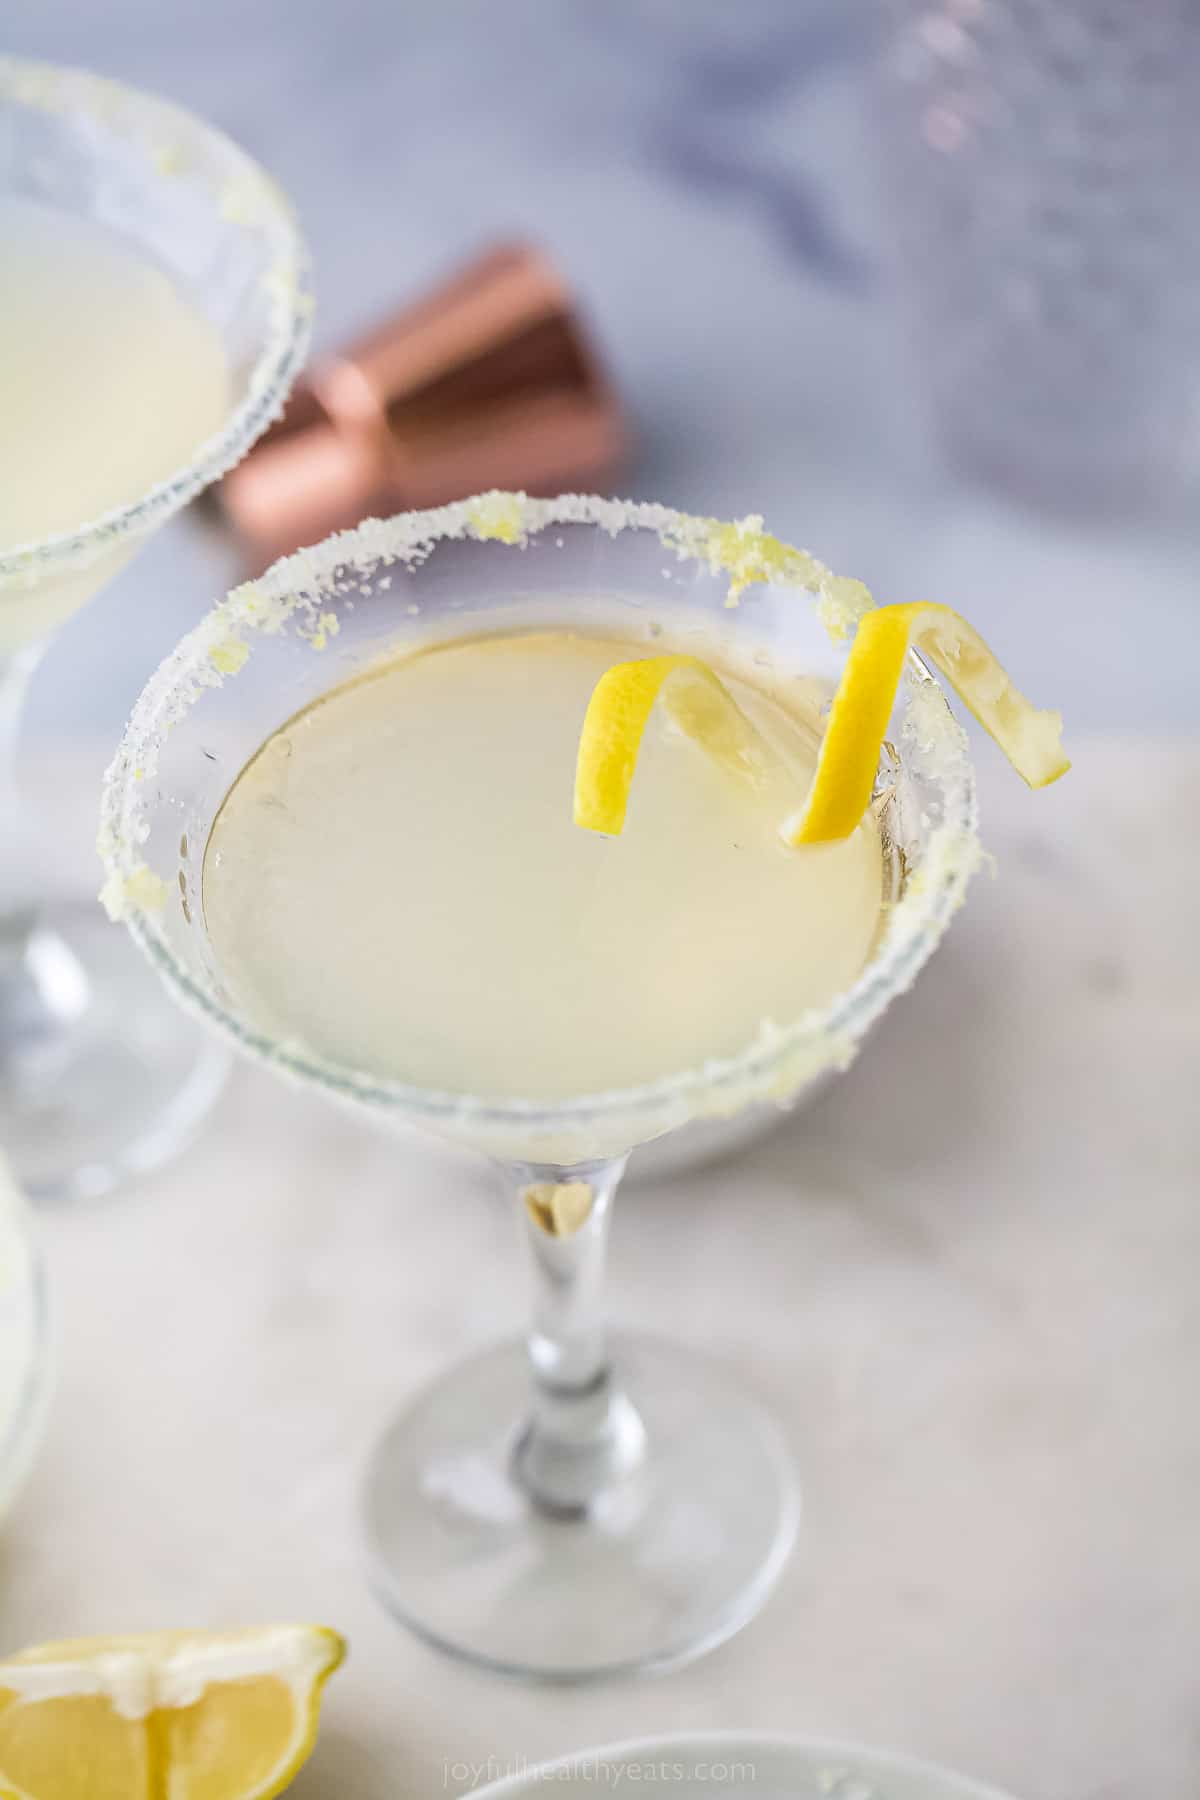 a lemon drop martini with a lemon rind garnish and sugared rim